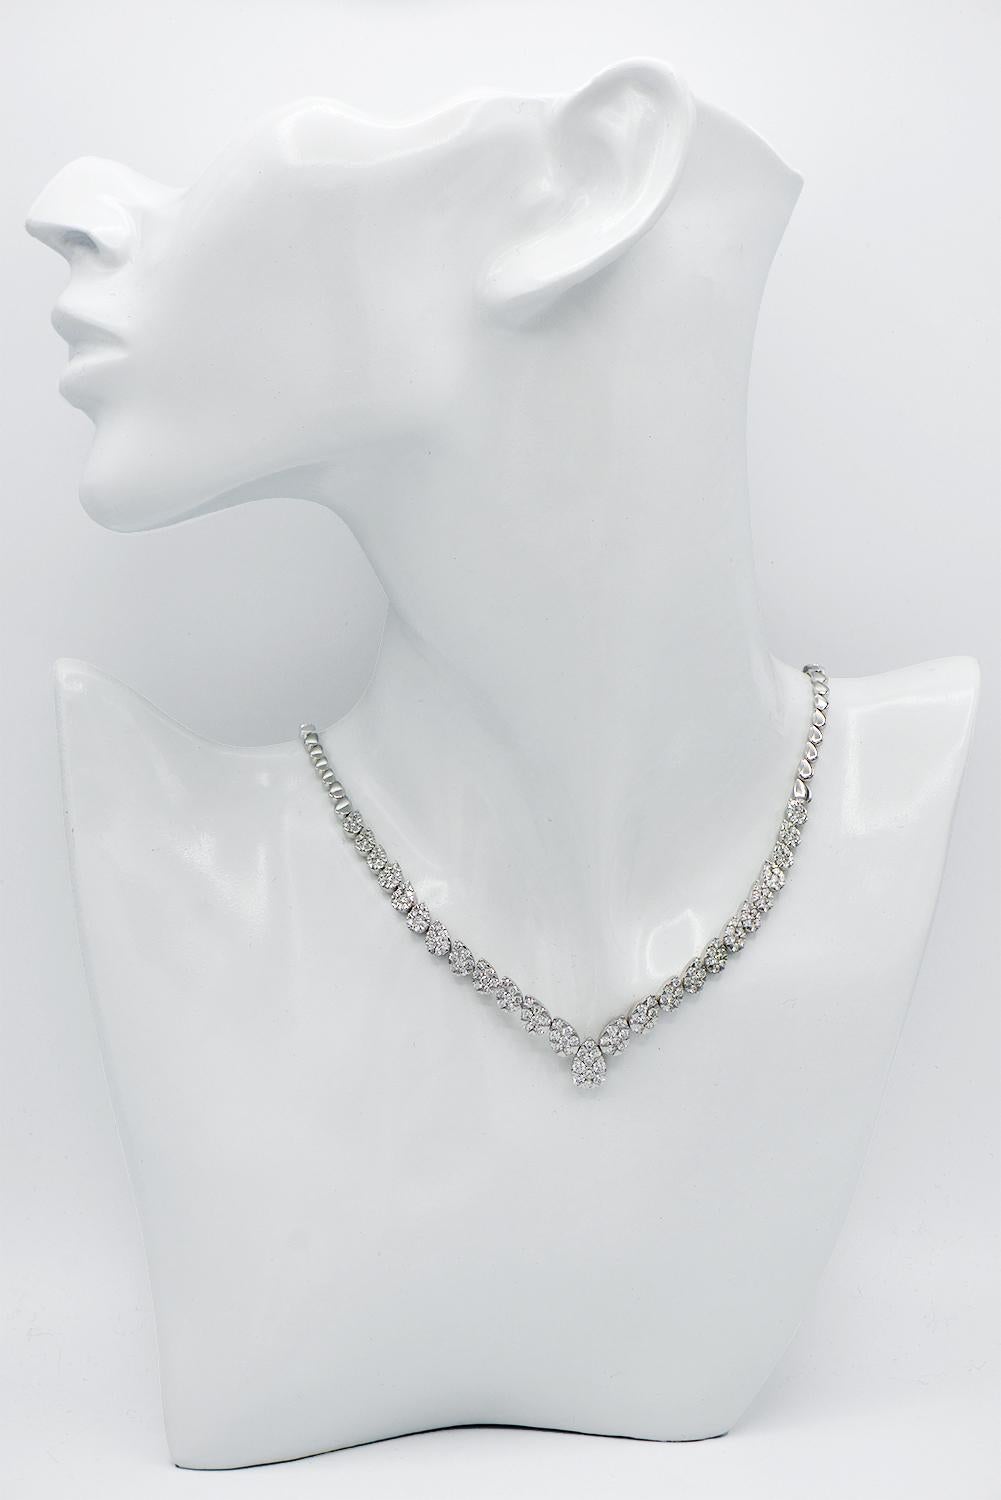 Round Cut Pear Shape Diamond Necklace